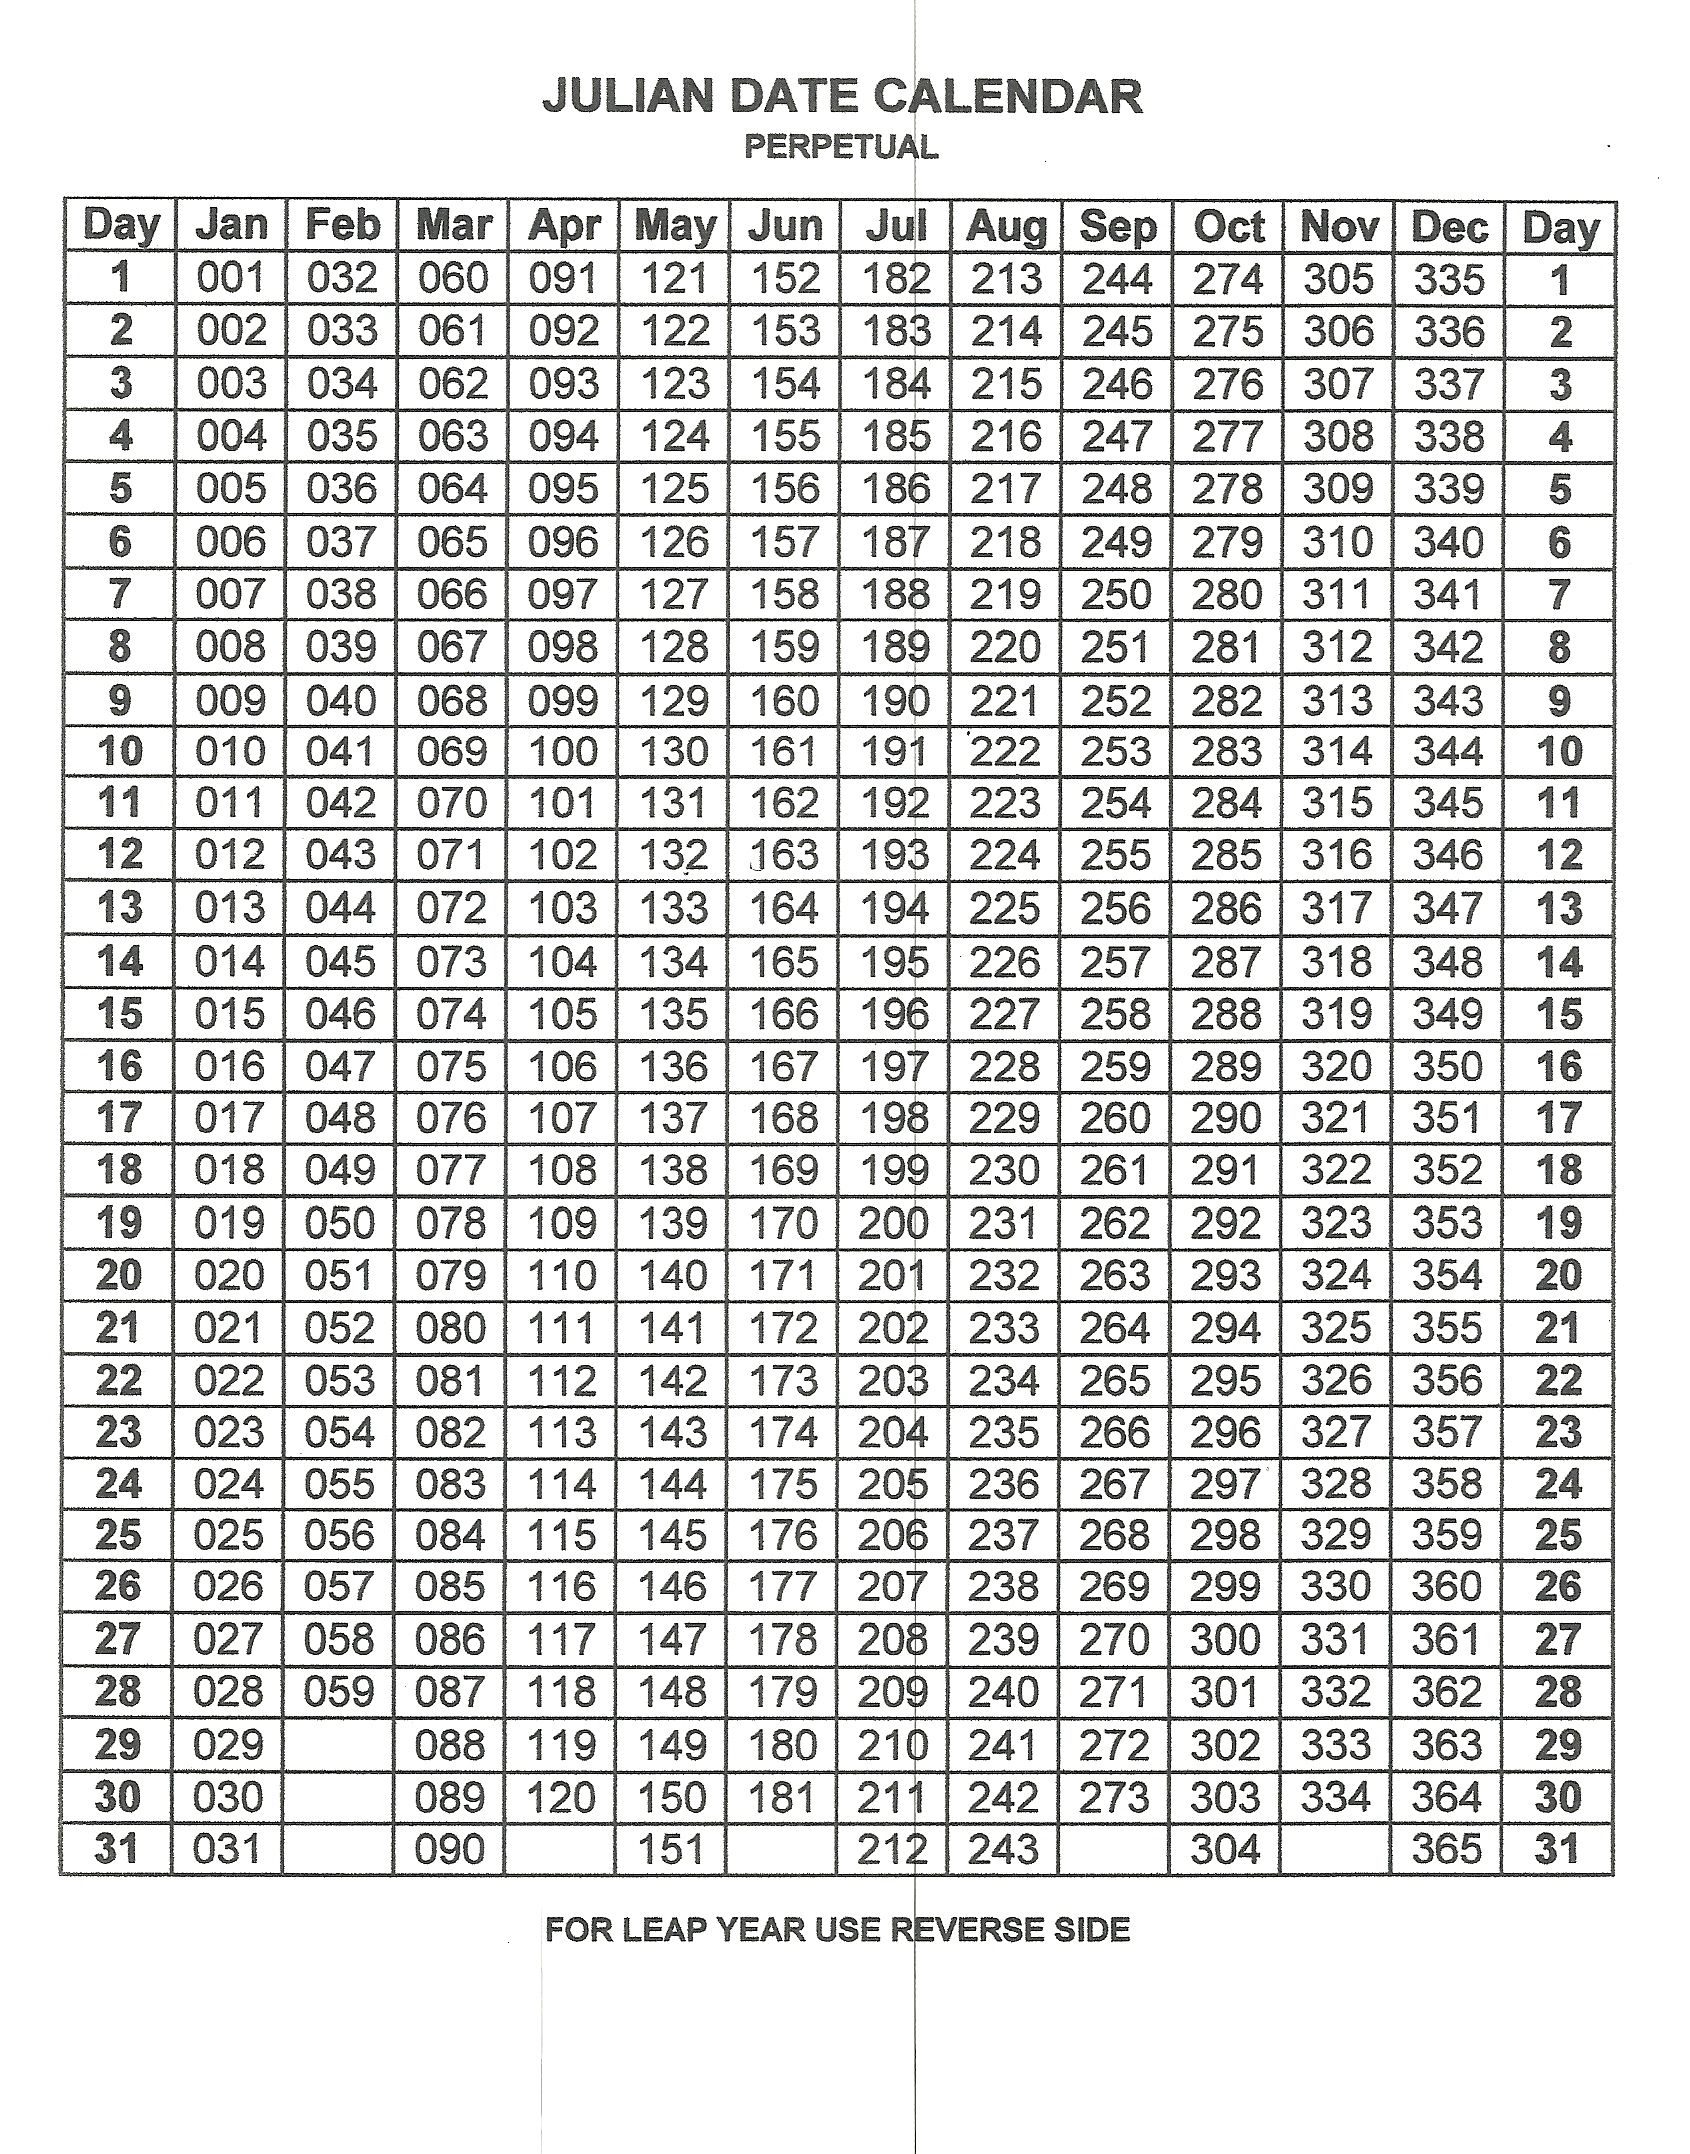 Perpetual Julian Date Calendar | Julian Dates, Calendar throughout Julian Date Calender 2020